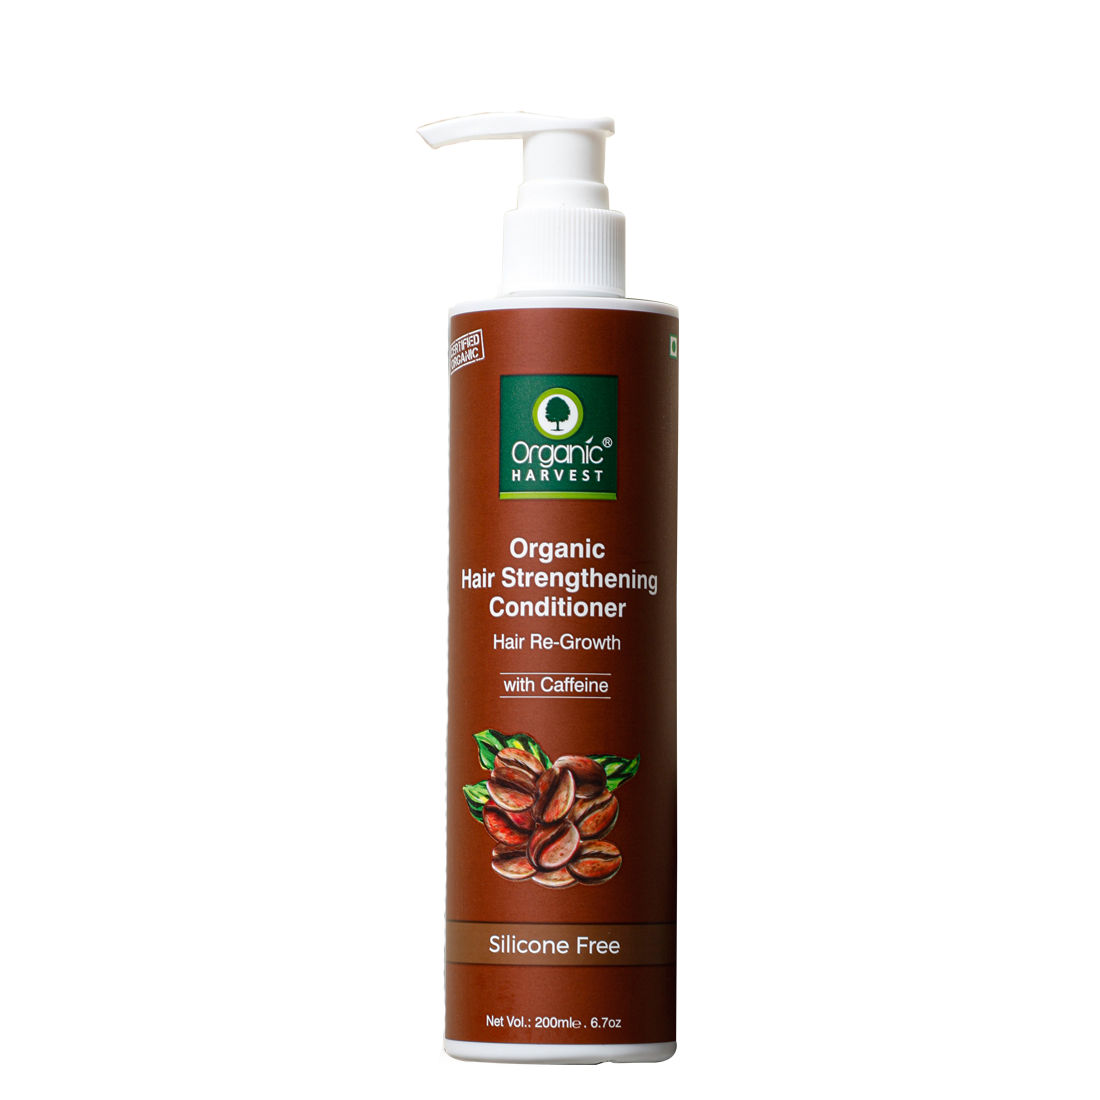 Organic Harvest Conditioner For Hair Fall Control & Hair Growth, Caffeine To Regain Strength In Hair